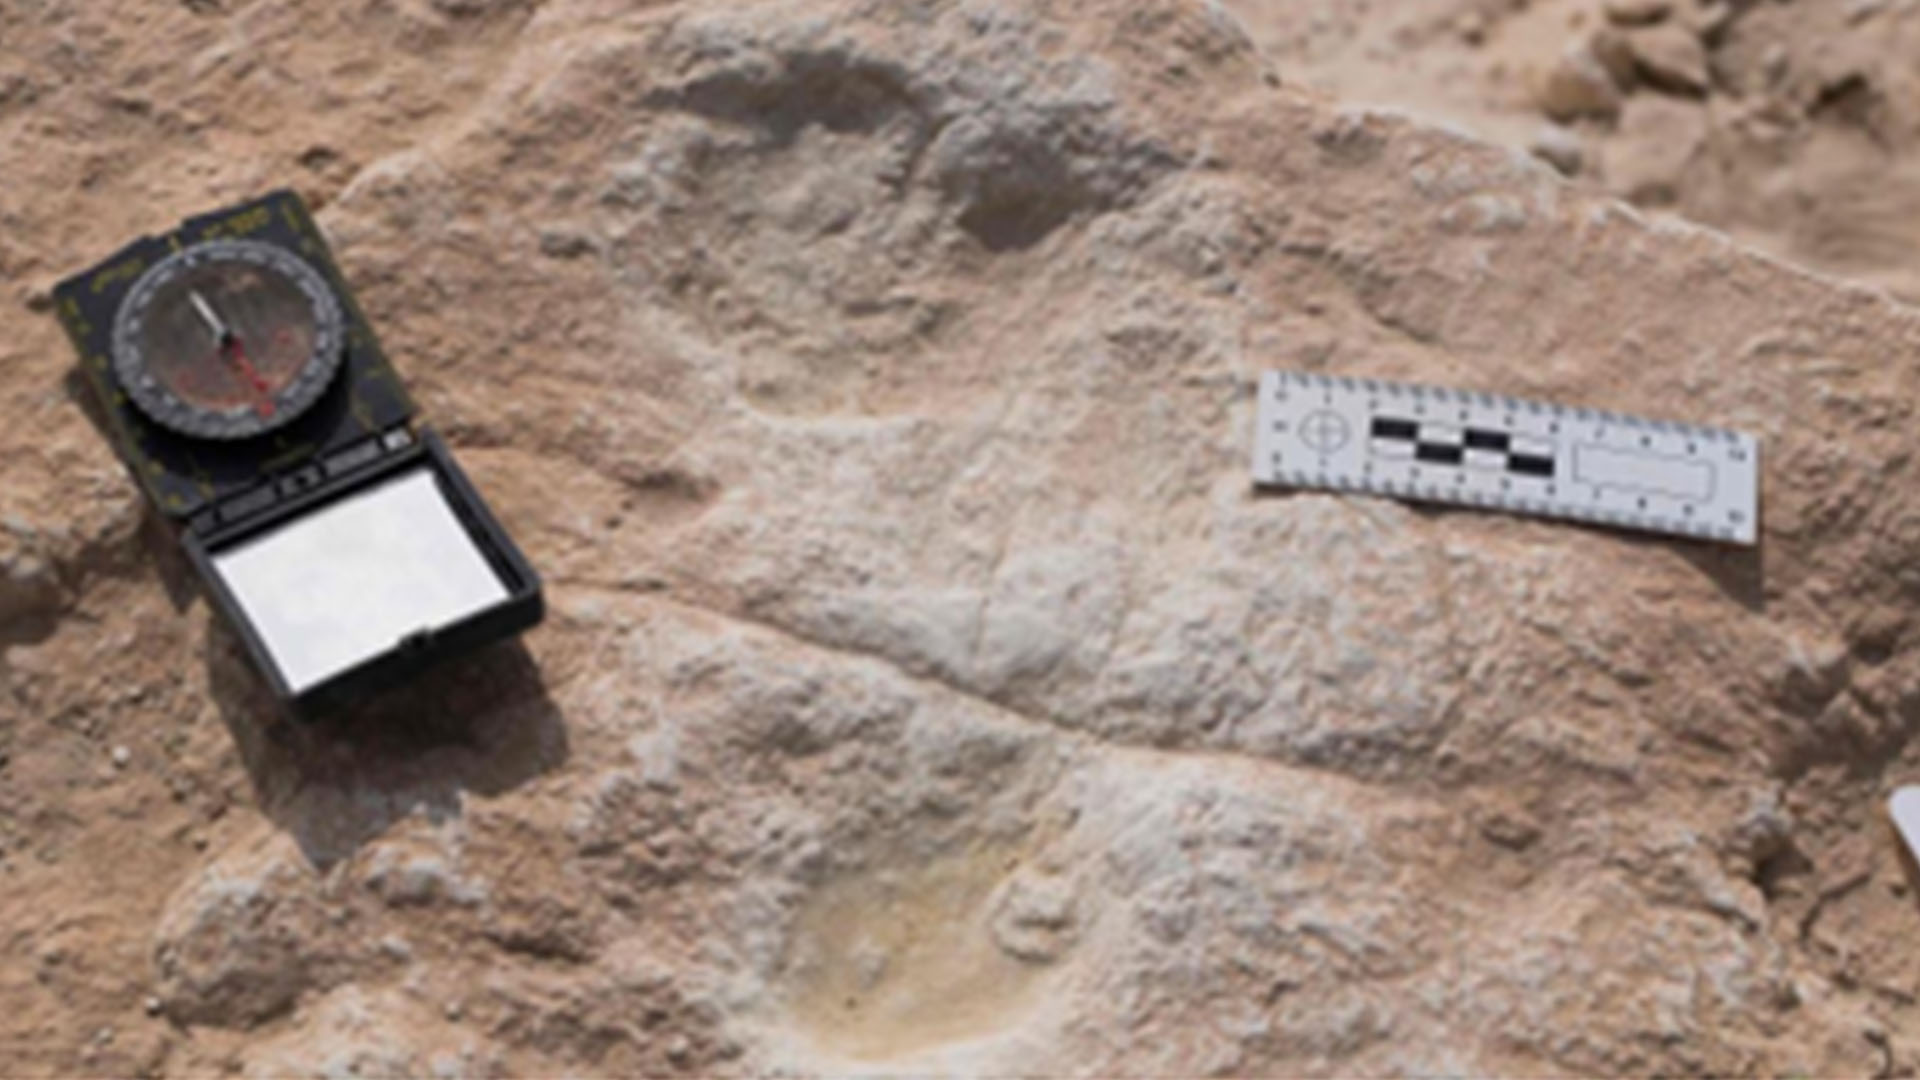 Human footprints up to 120,000 years ago found in Saudi Arabia